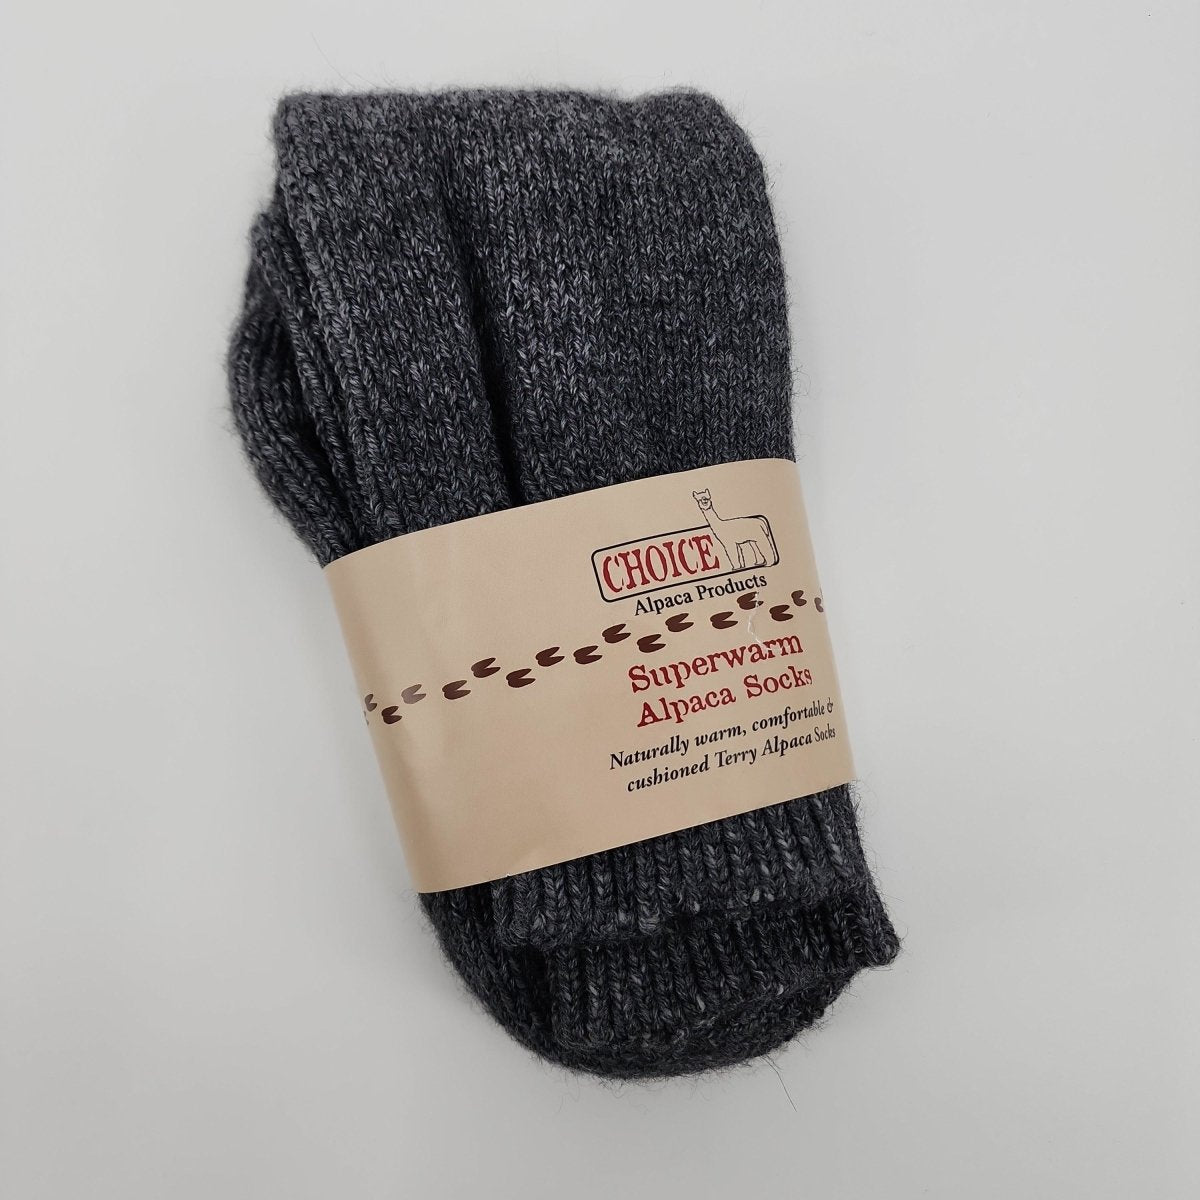 "Superwarm" Alpaca Socks - Made in the USA - Hilltop Packs LLC